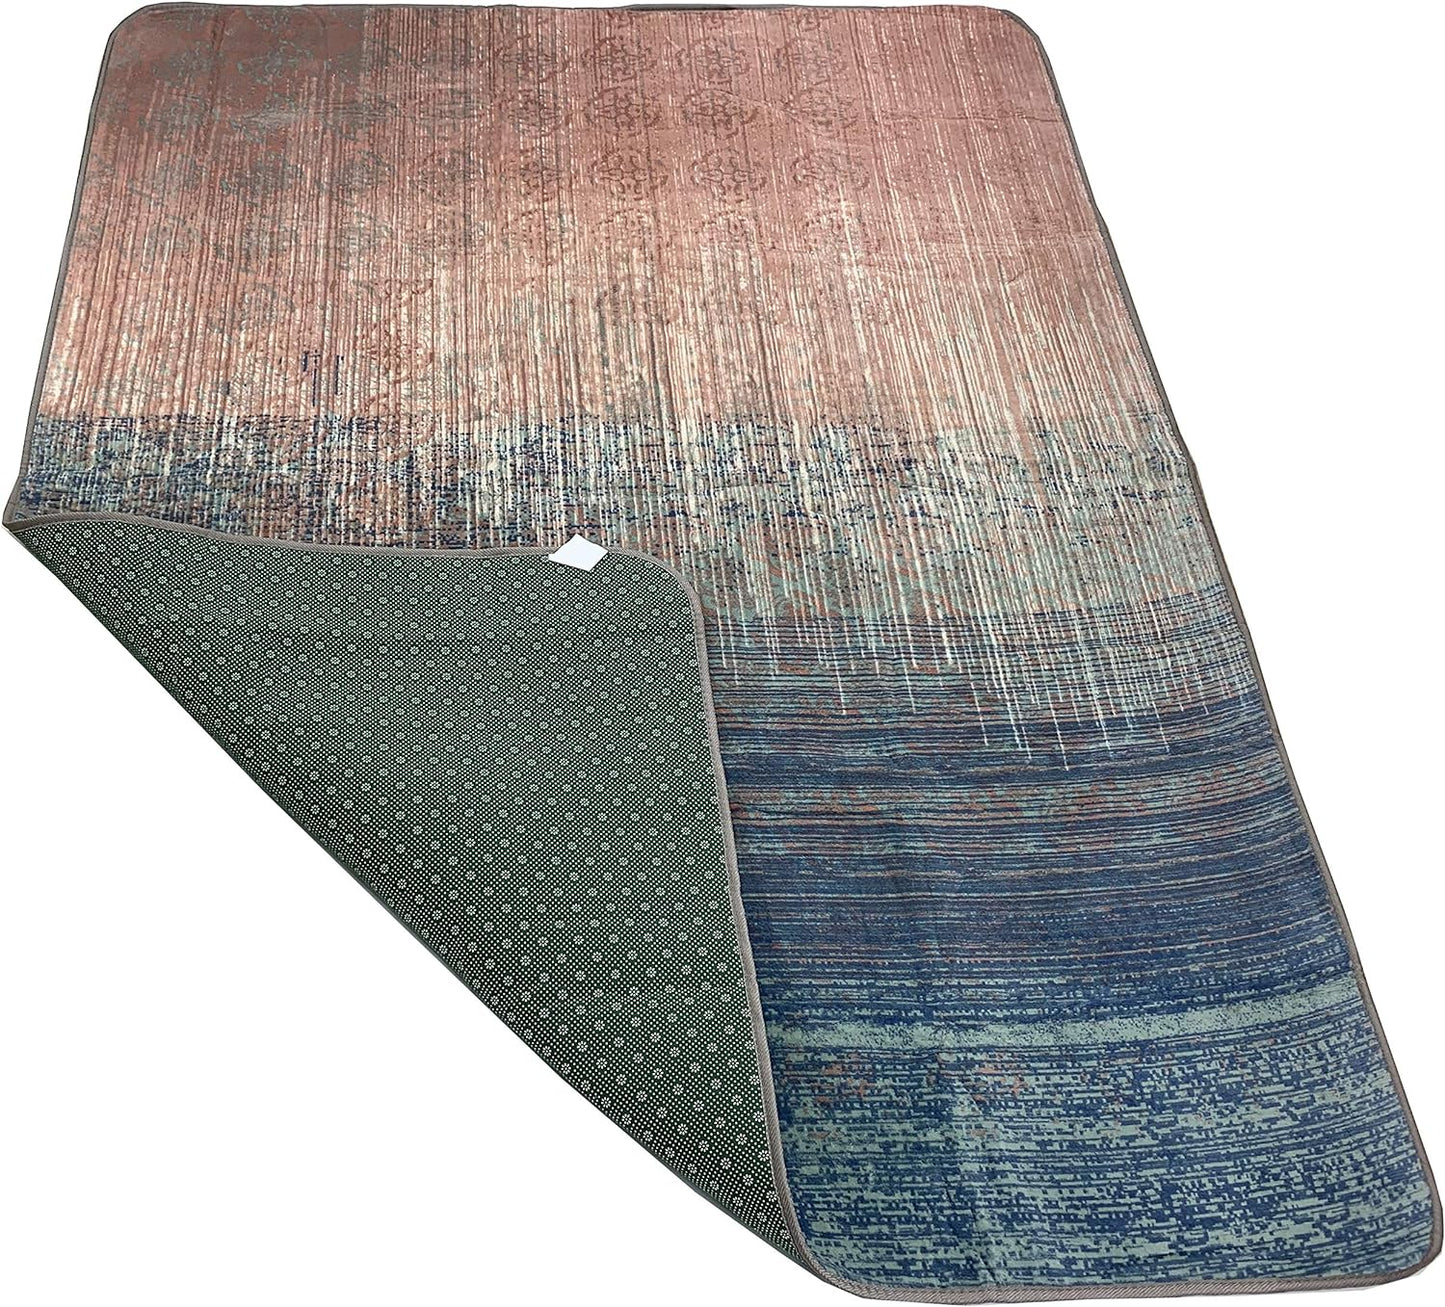 Blanket Solid Color Area Rug Rugs Slip Skid Resistant Rubber Backing (Blue, 5 x 7 (4'11' x 6'9")